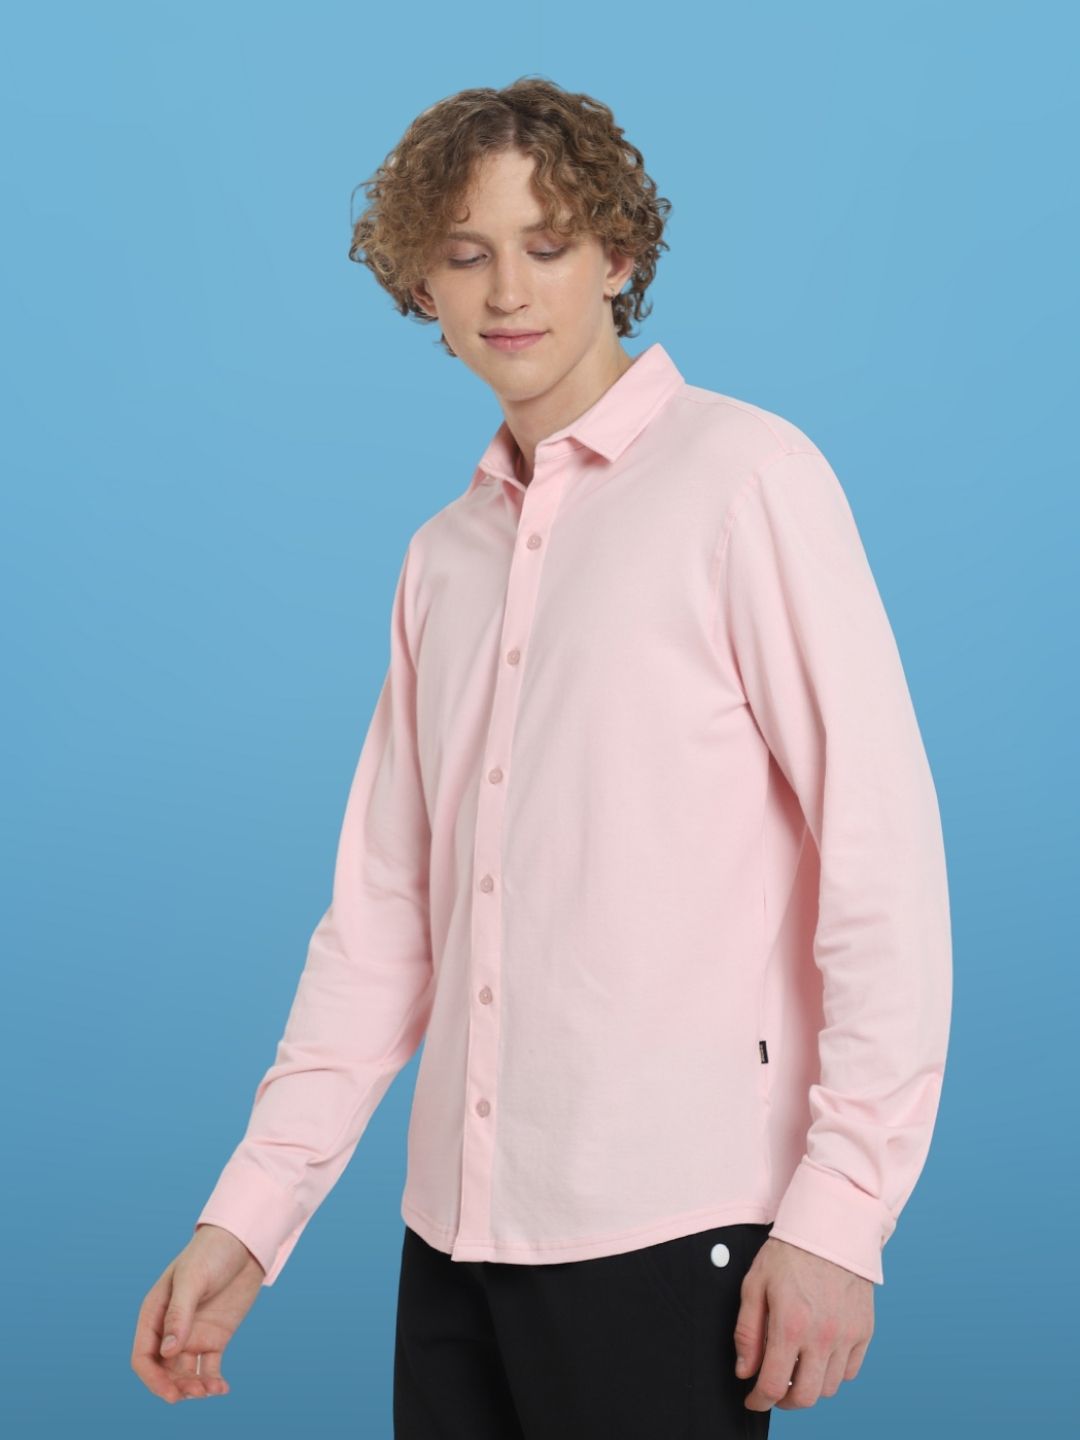 Blush Pink Sporty Pique Shirt - Wearduds